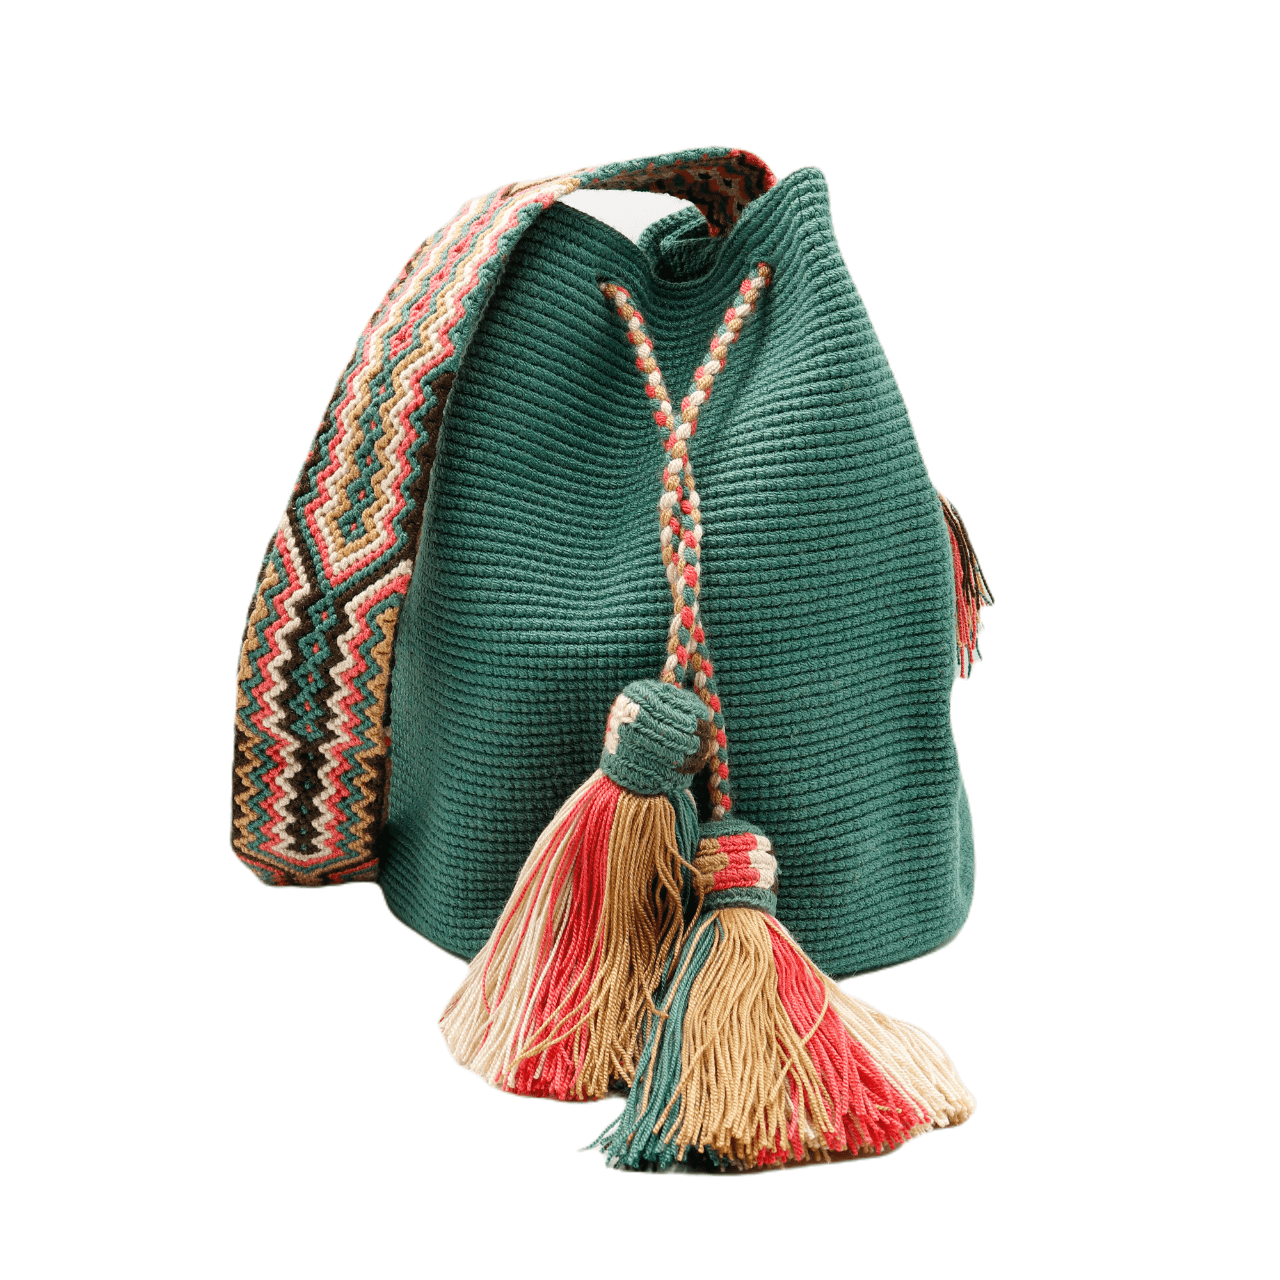 Liz Wayuu bag in sage green - Handmade crochet bag with intricate design, showcasing artisan craftsmanship from Colombia.